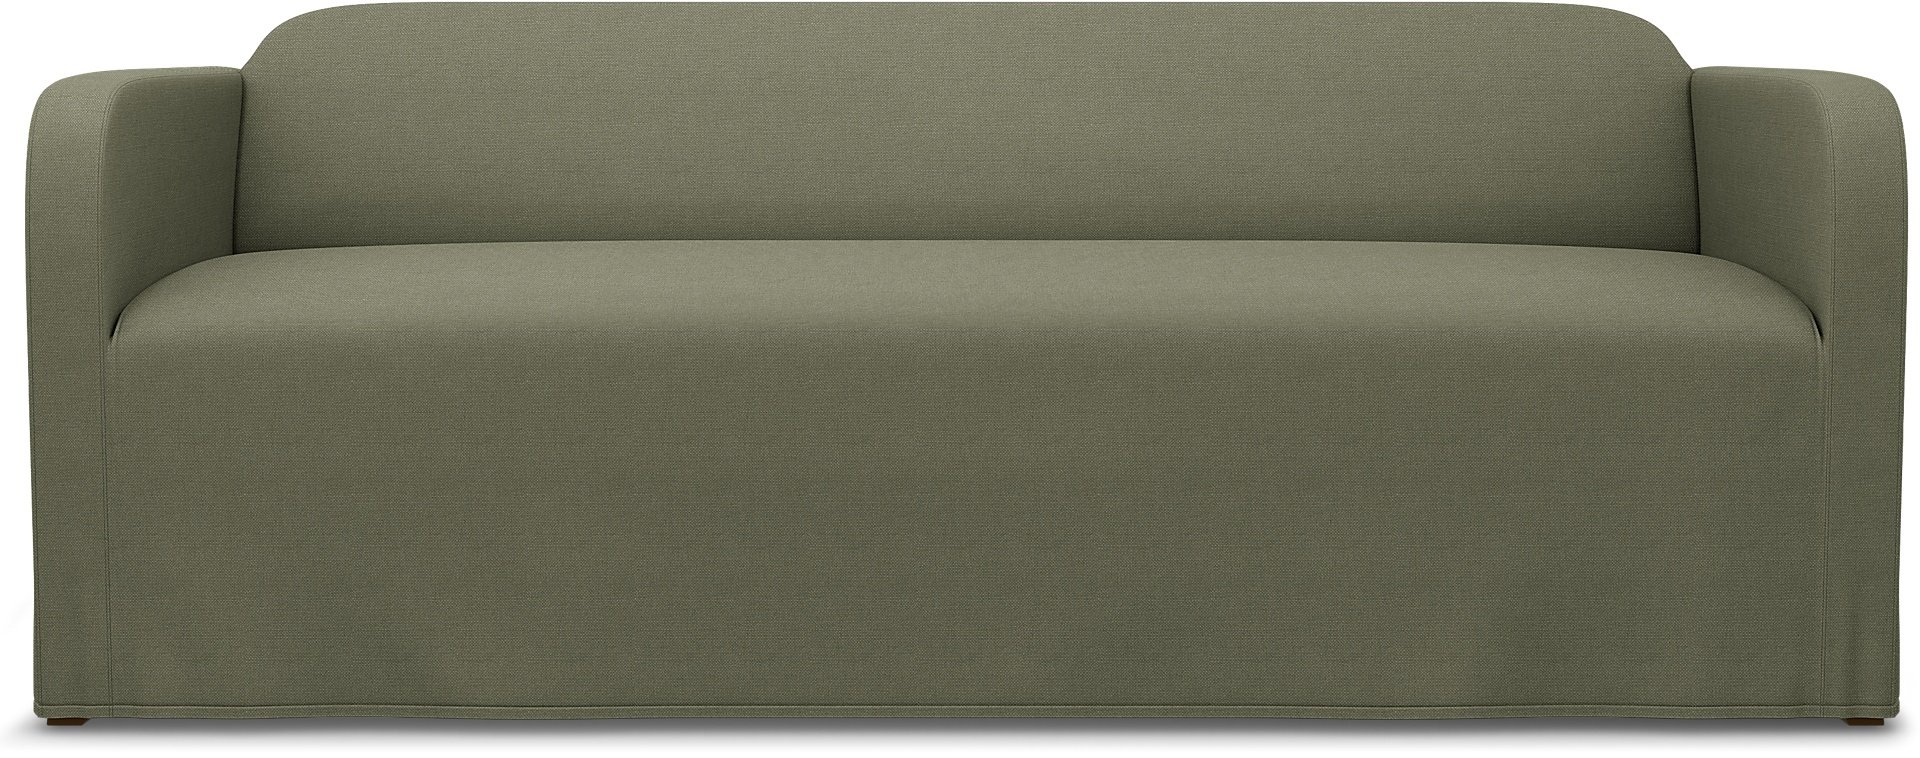 IKEA - Linanas 3 Seater cover, Sage, Linen - Bemz